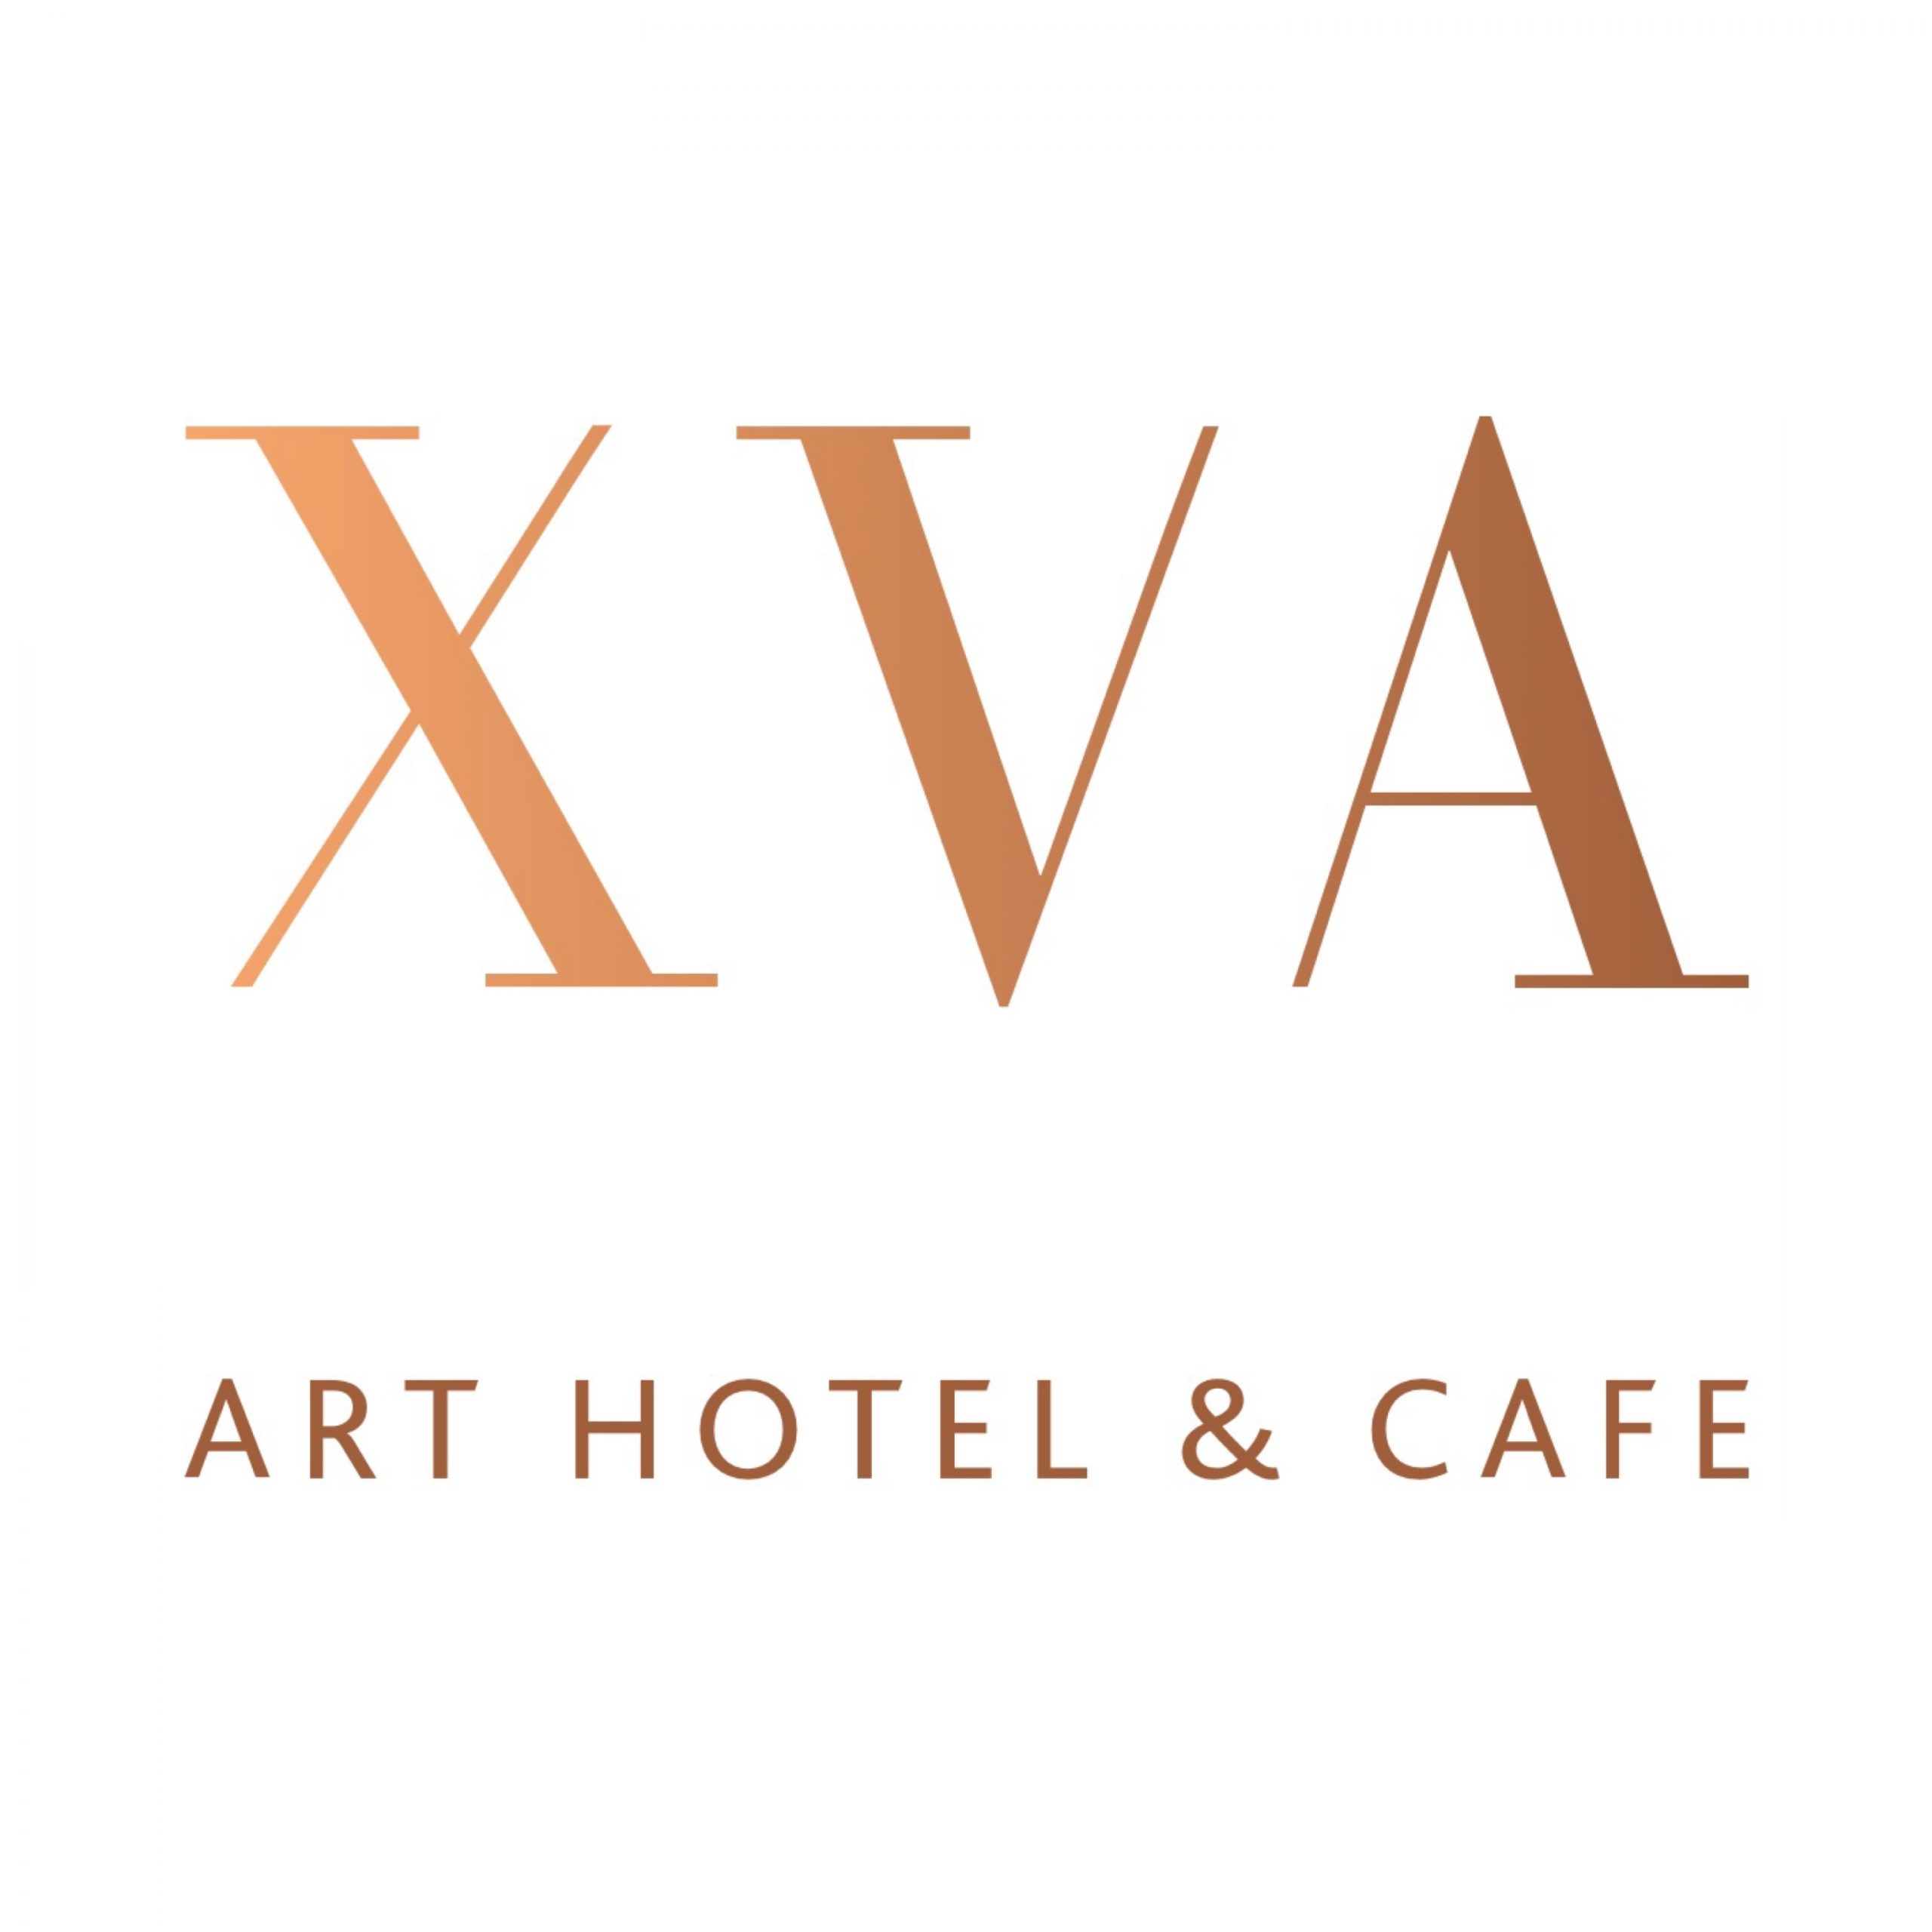 XVA Café - Coming Soon in UAE